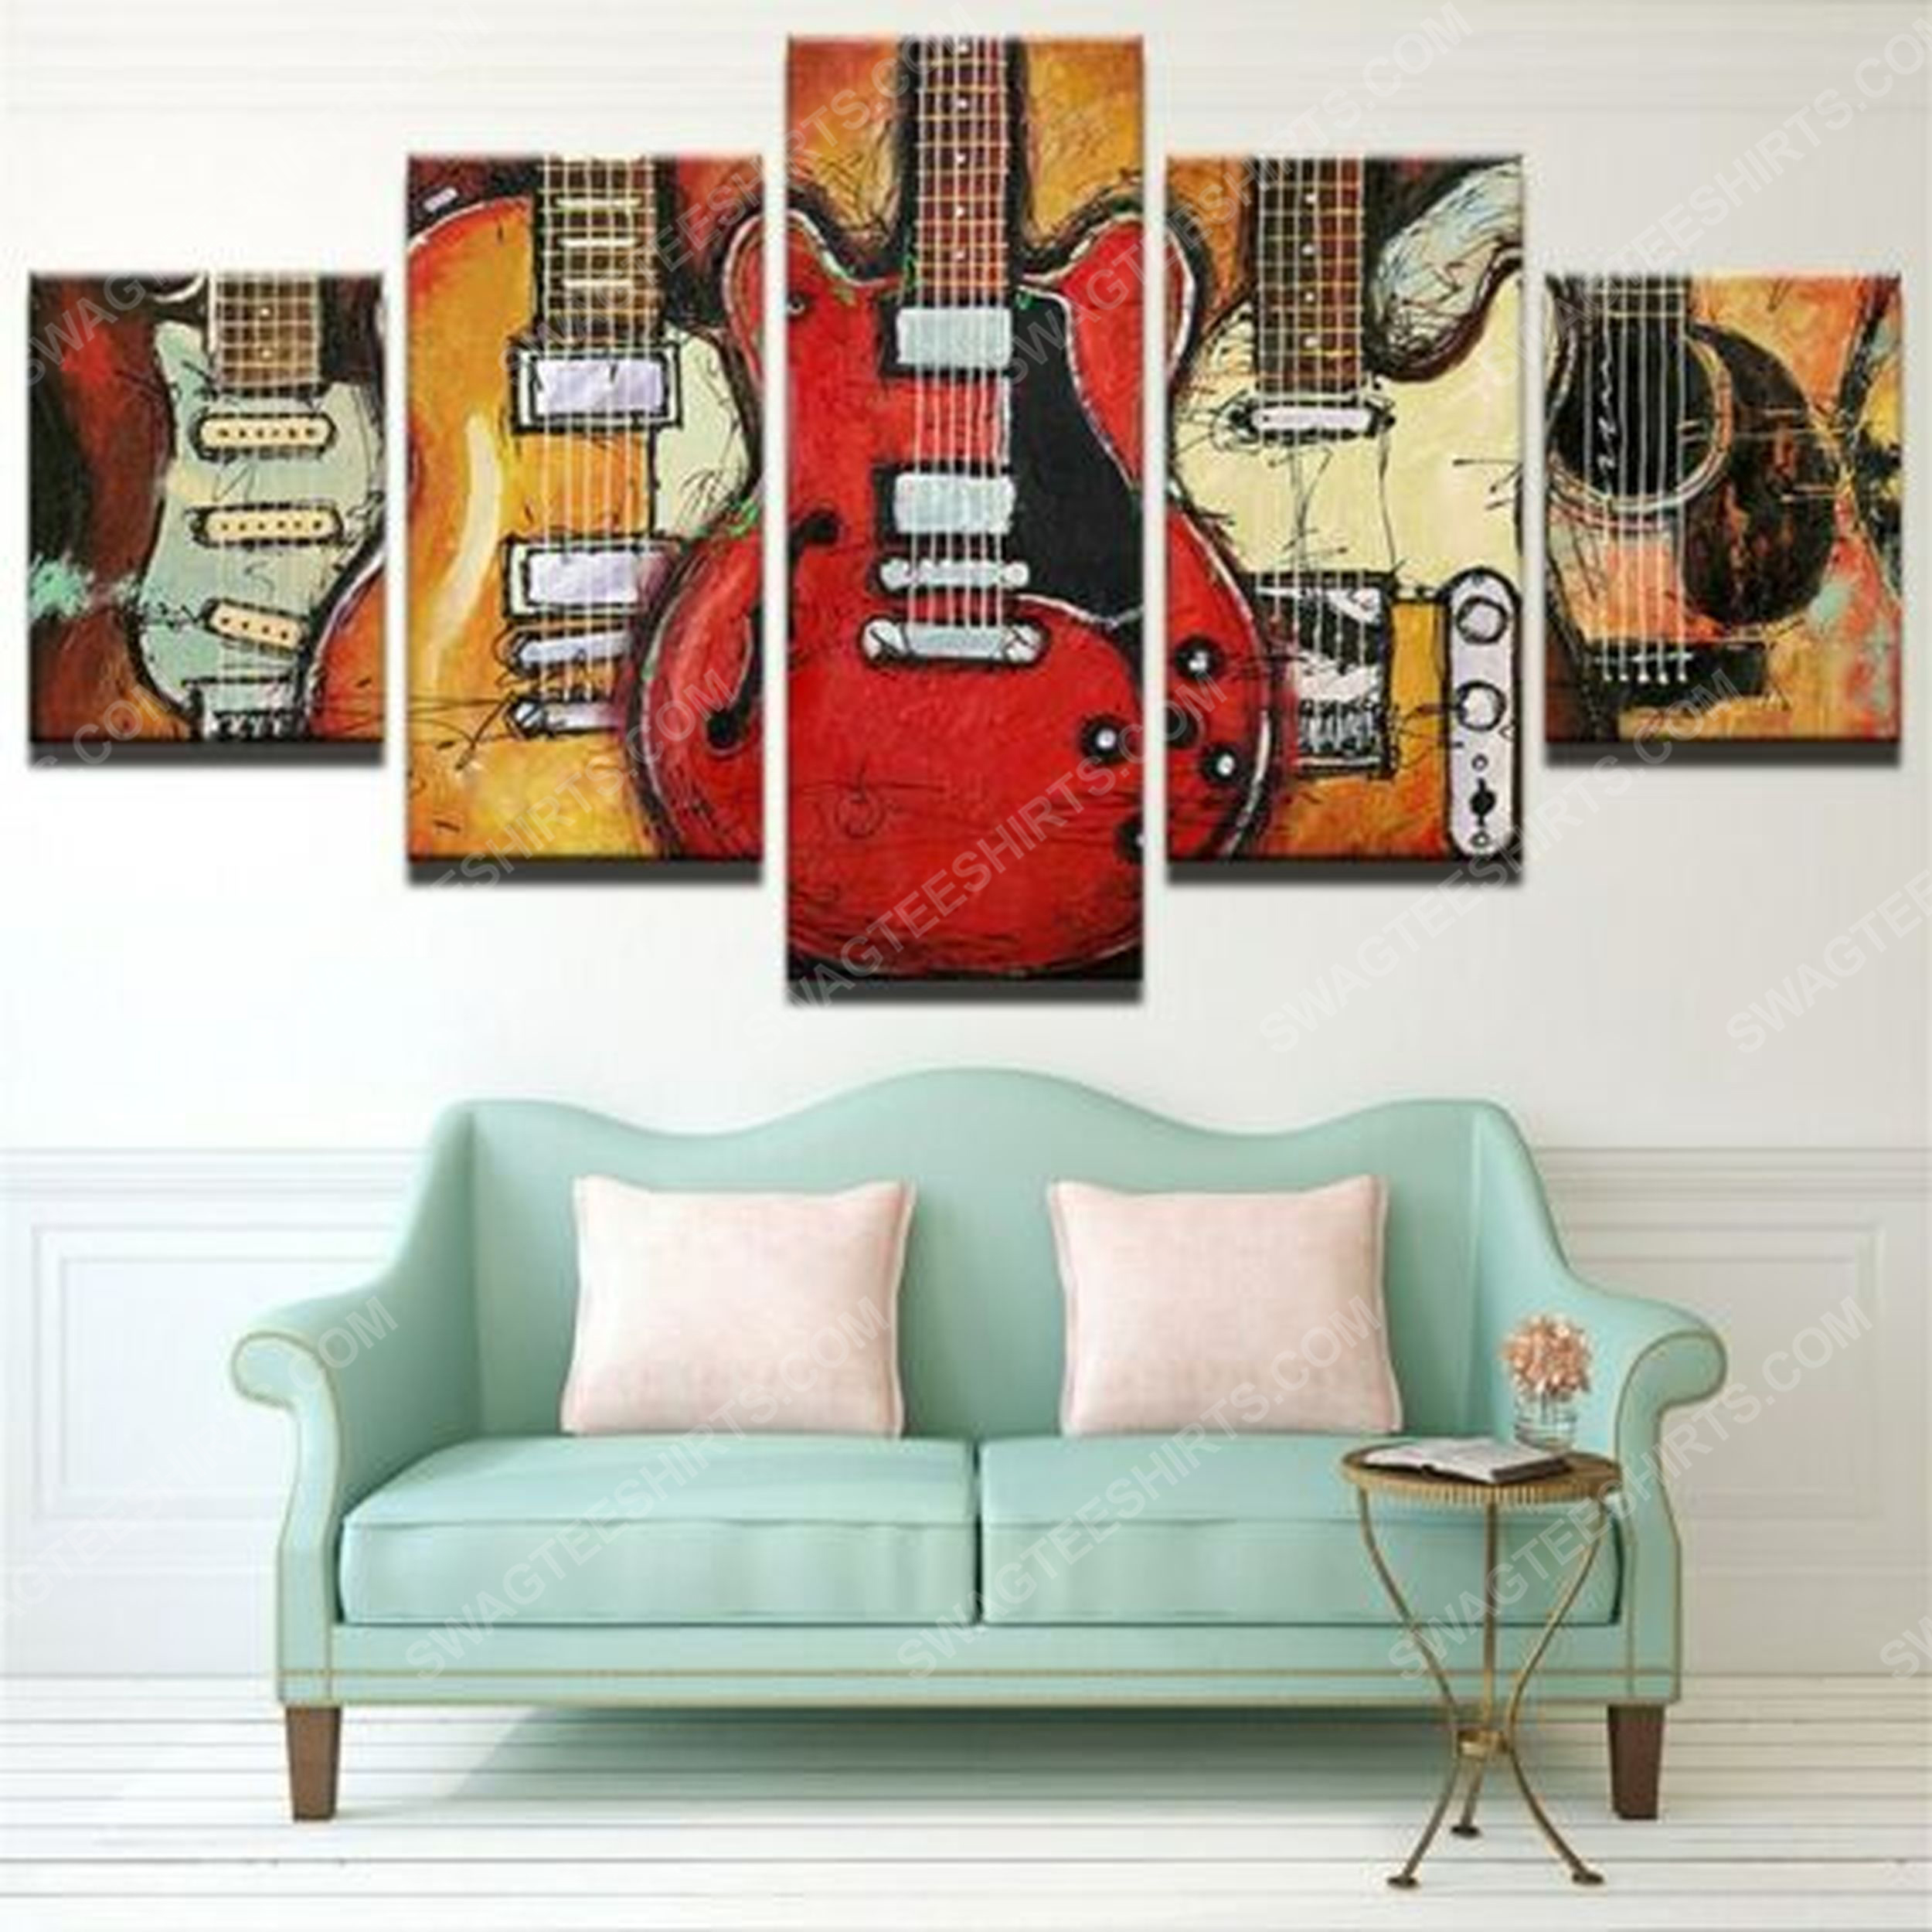 Vintage guitars music print painting canvas wall art home decor